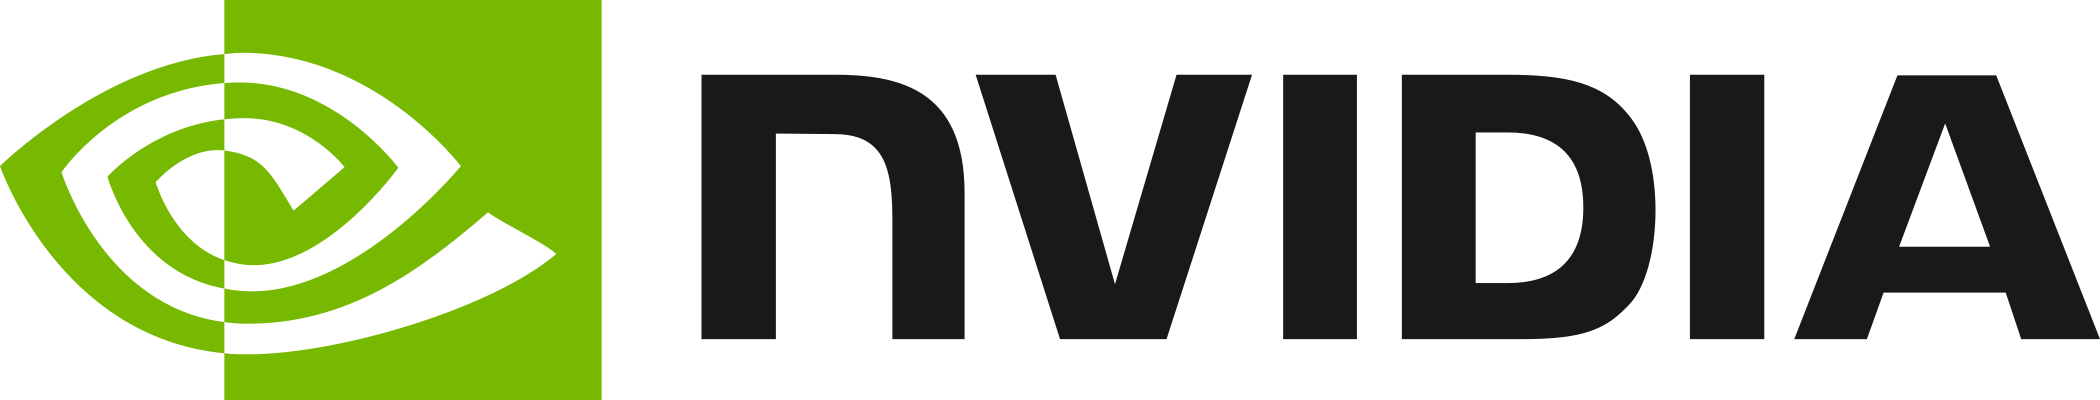 Nvidia Download Logo Icon Png Svg Logo Download - vrogue.co